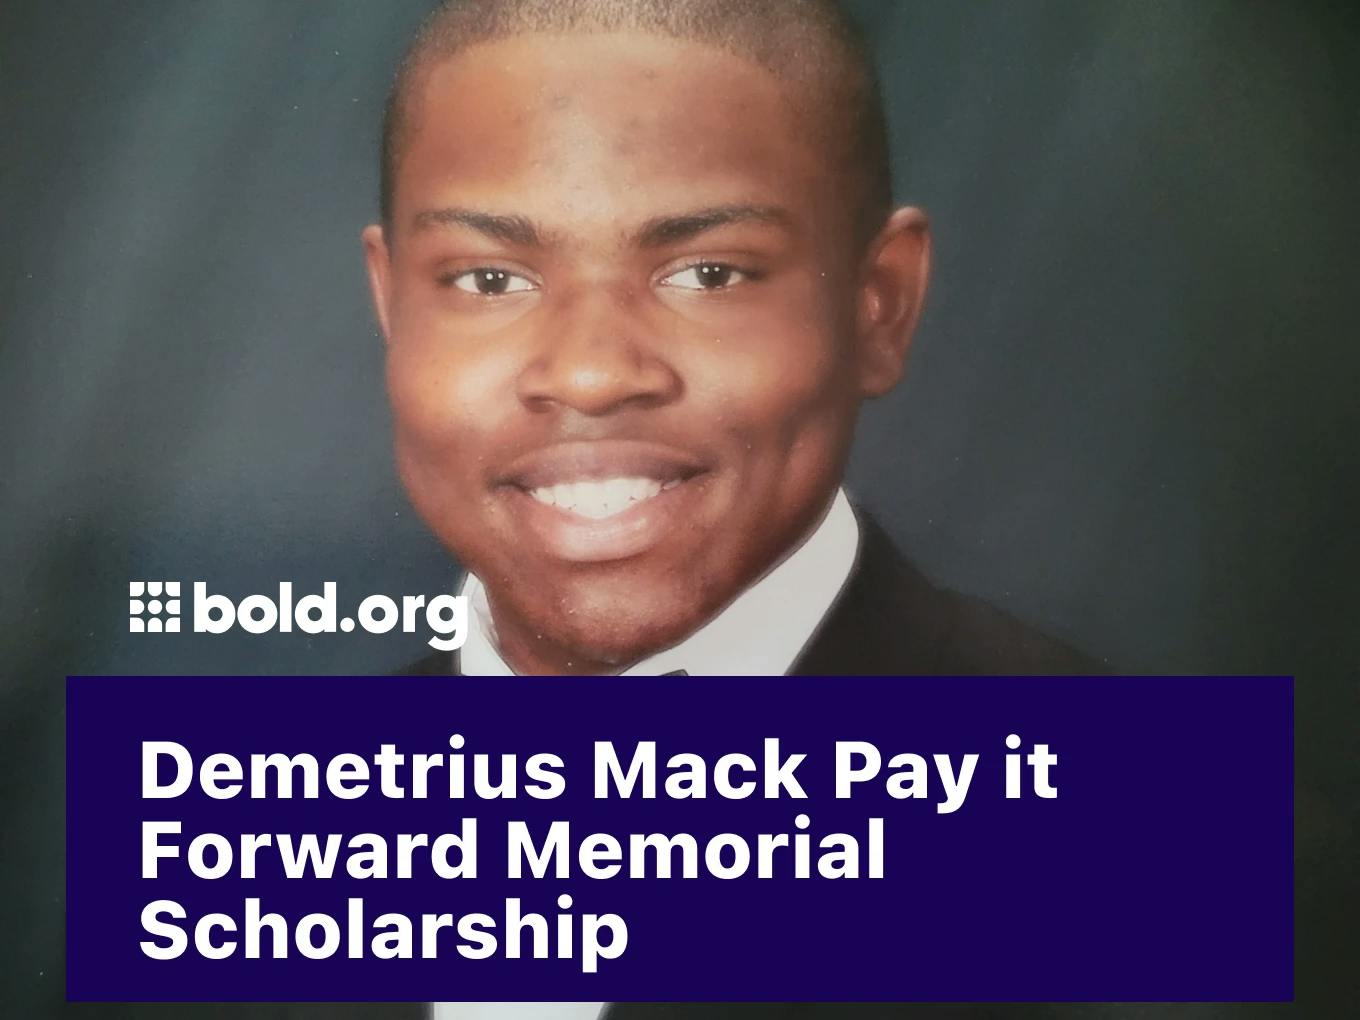 Demetrius Mack Pay It Forward Memorial Scholarship